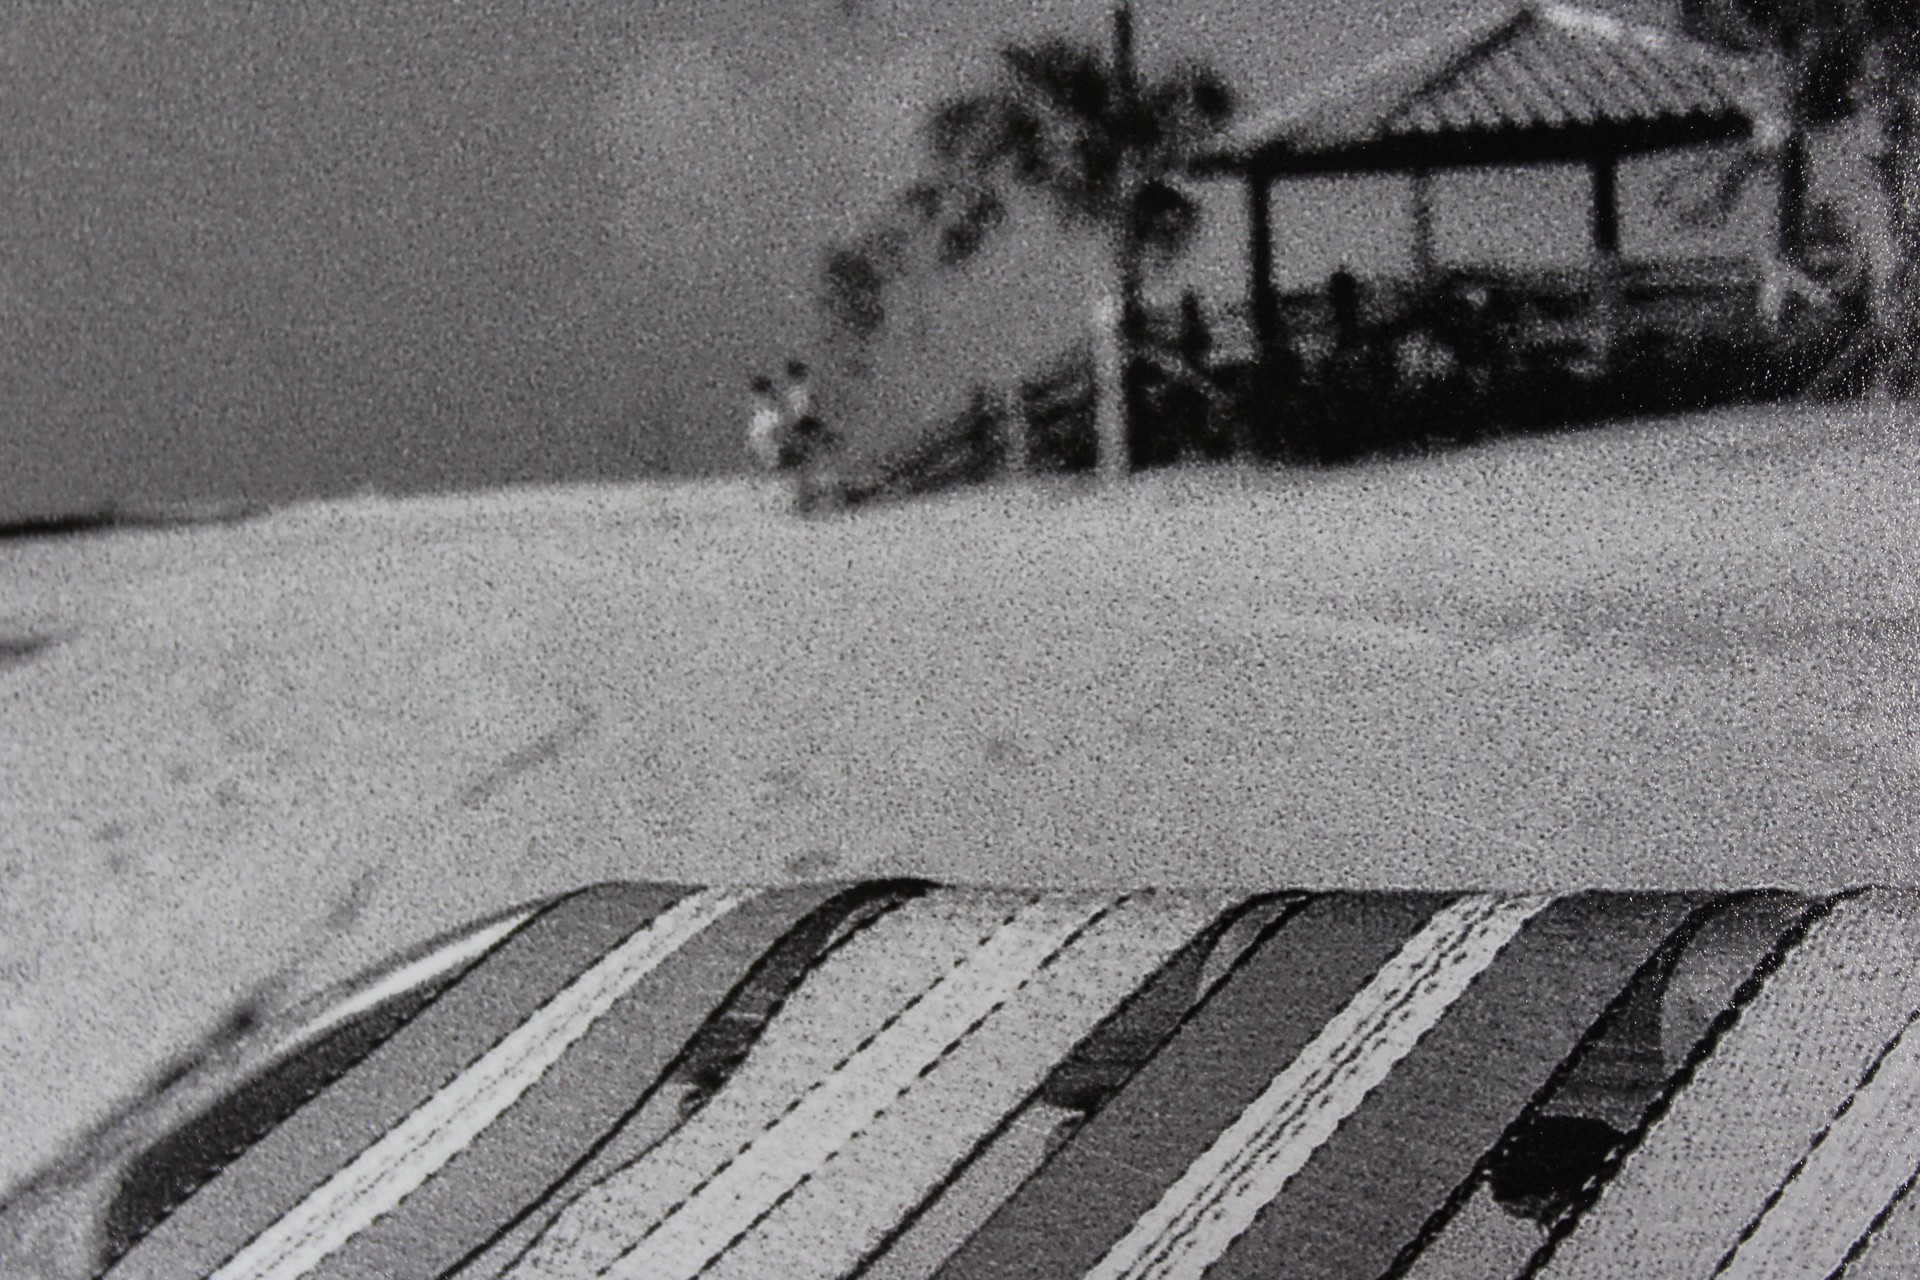 Sunbather, Miami Beach (open edition)(unframed) by James Hayman